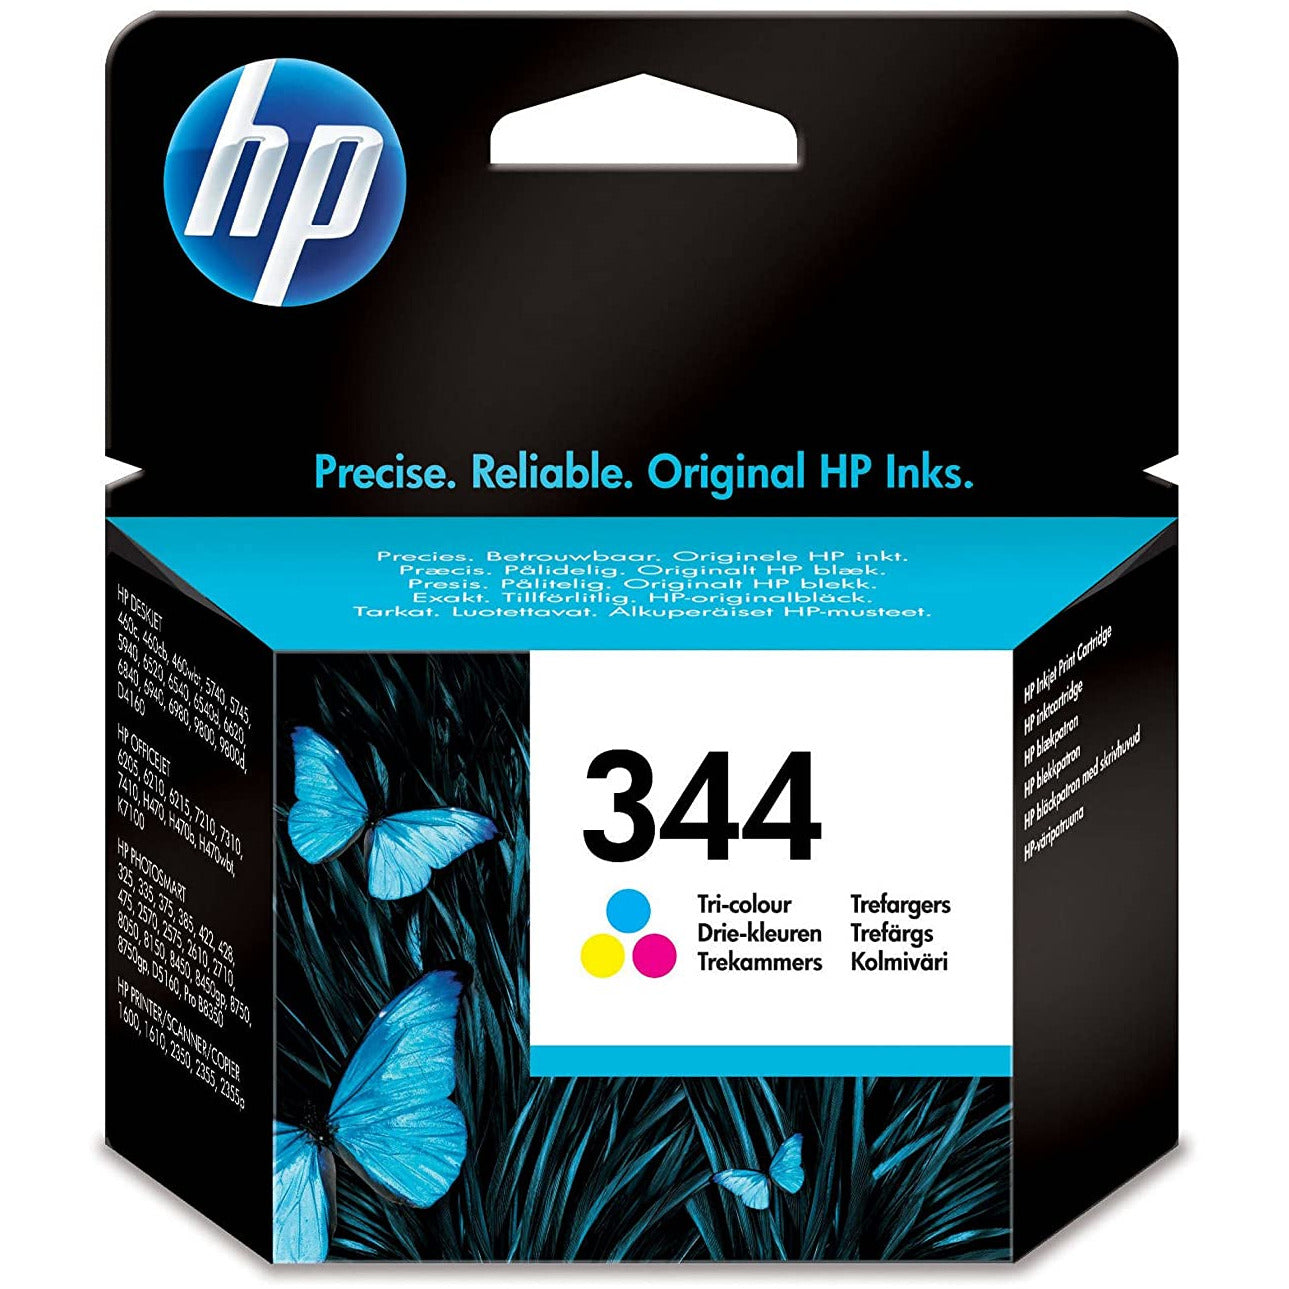 HP 344 colour ink cartridge